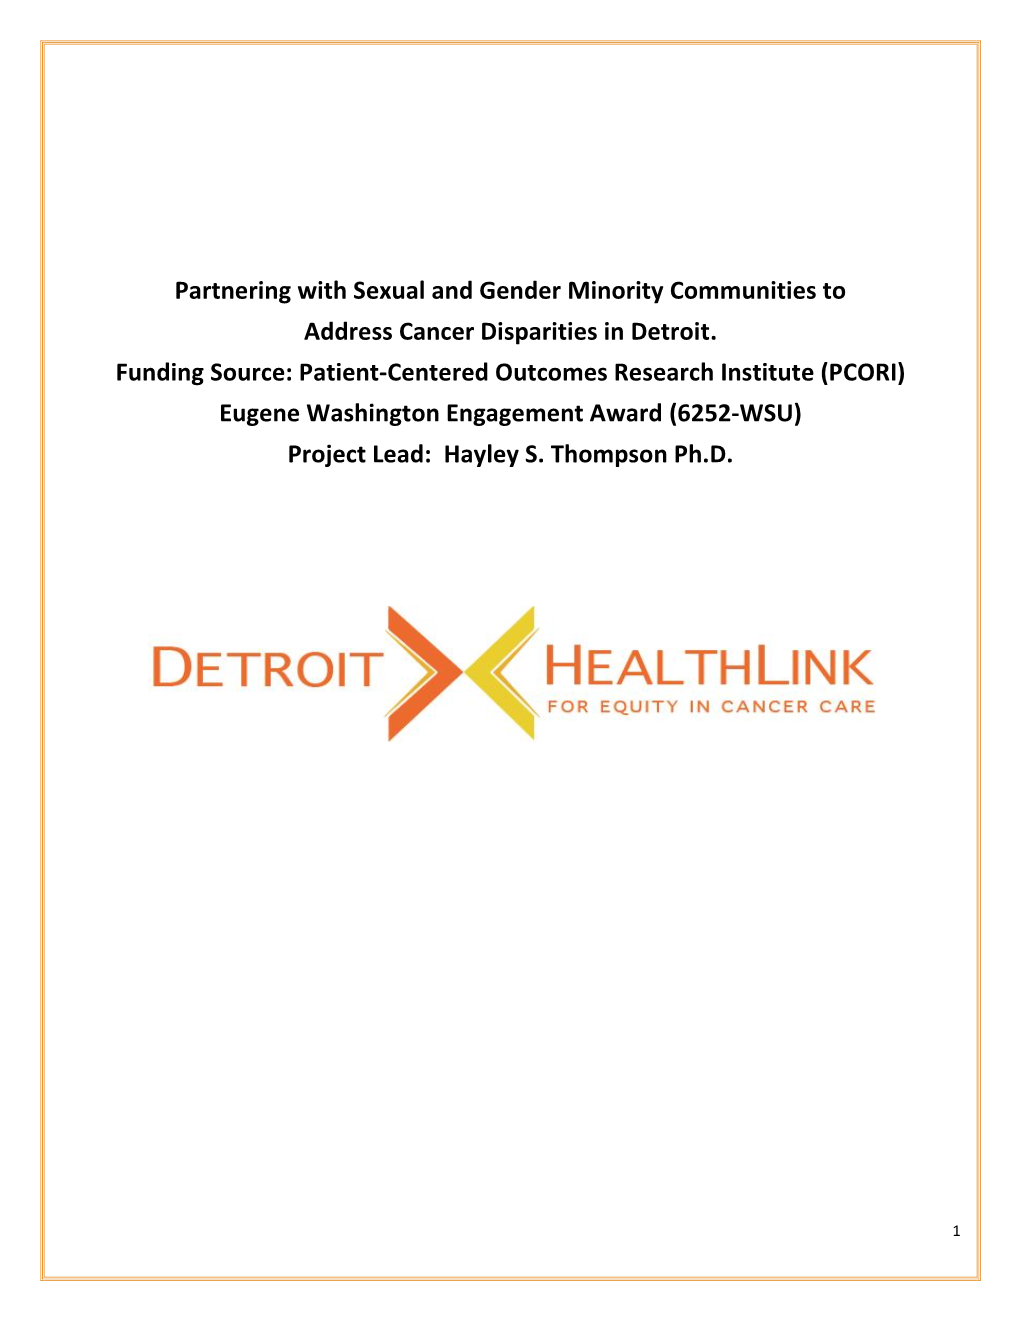 Detroit Health Link Report